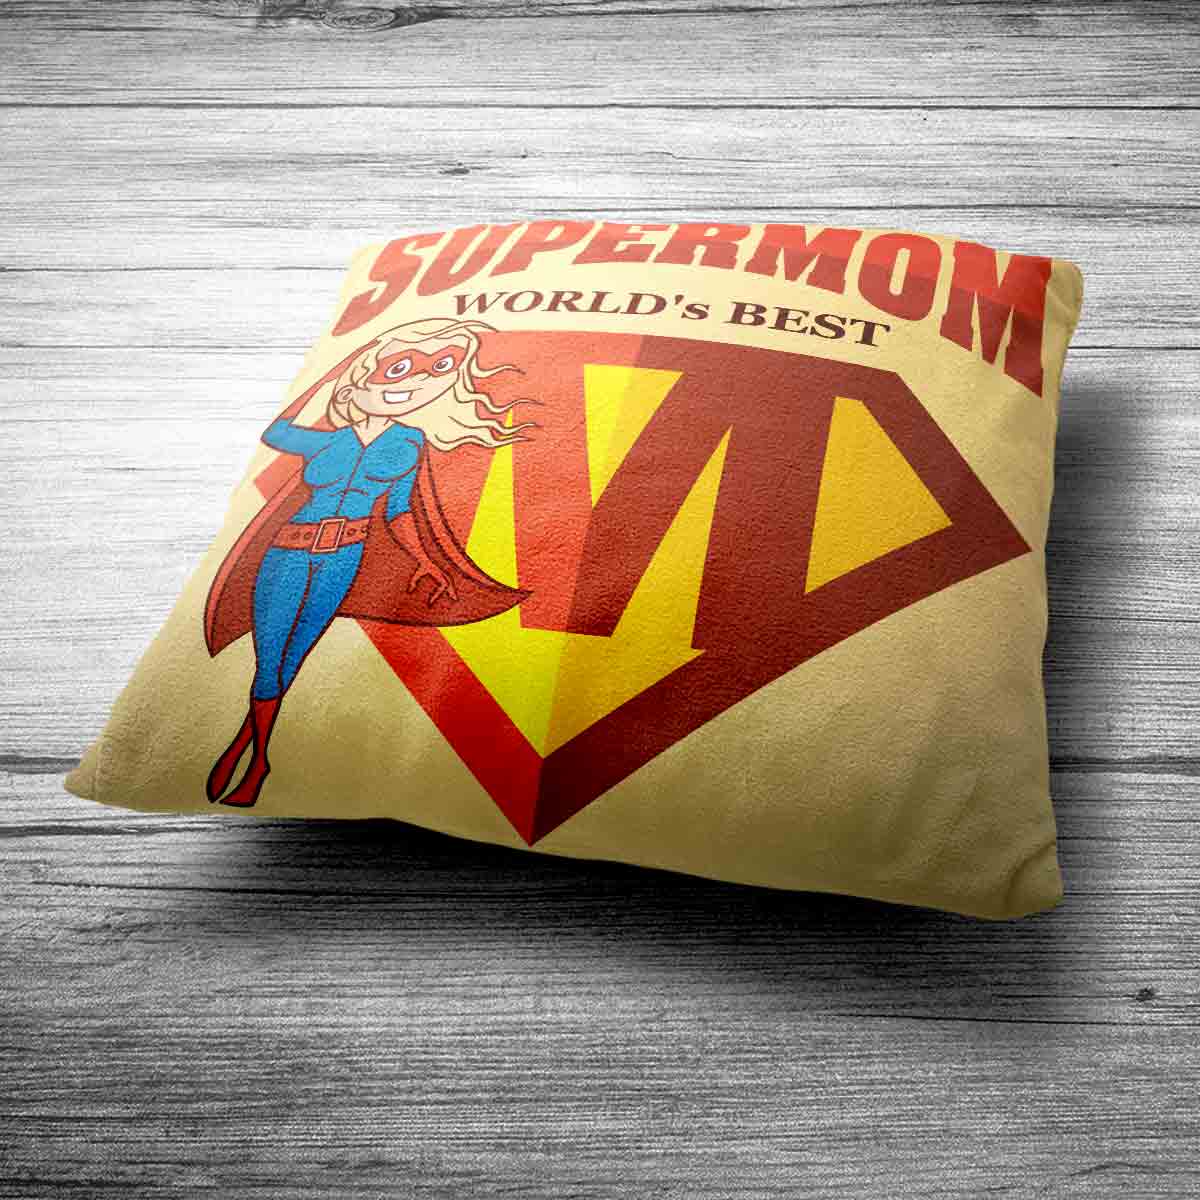 World's Best SuperMom Cushion